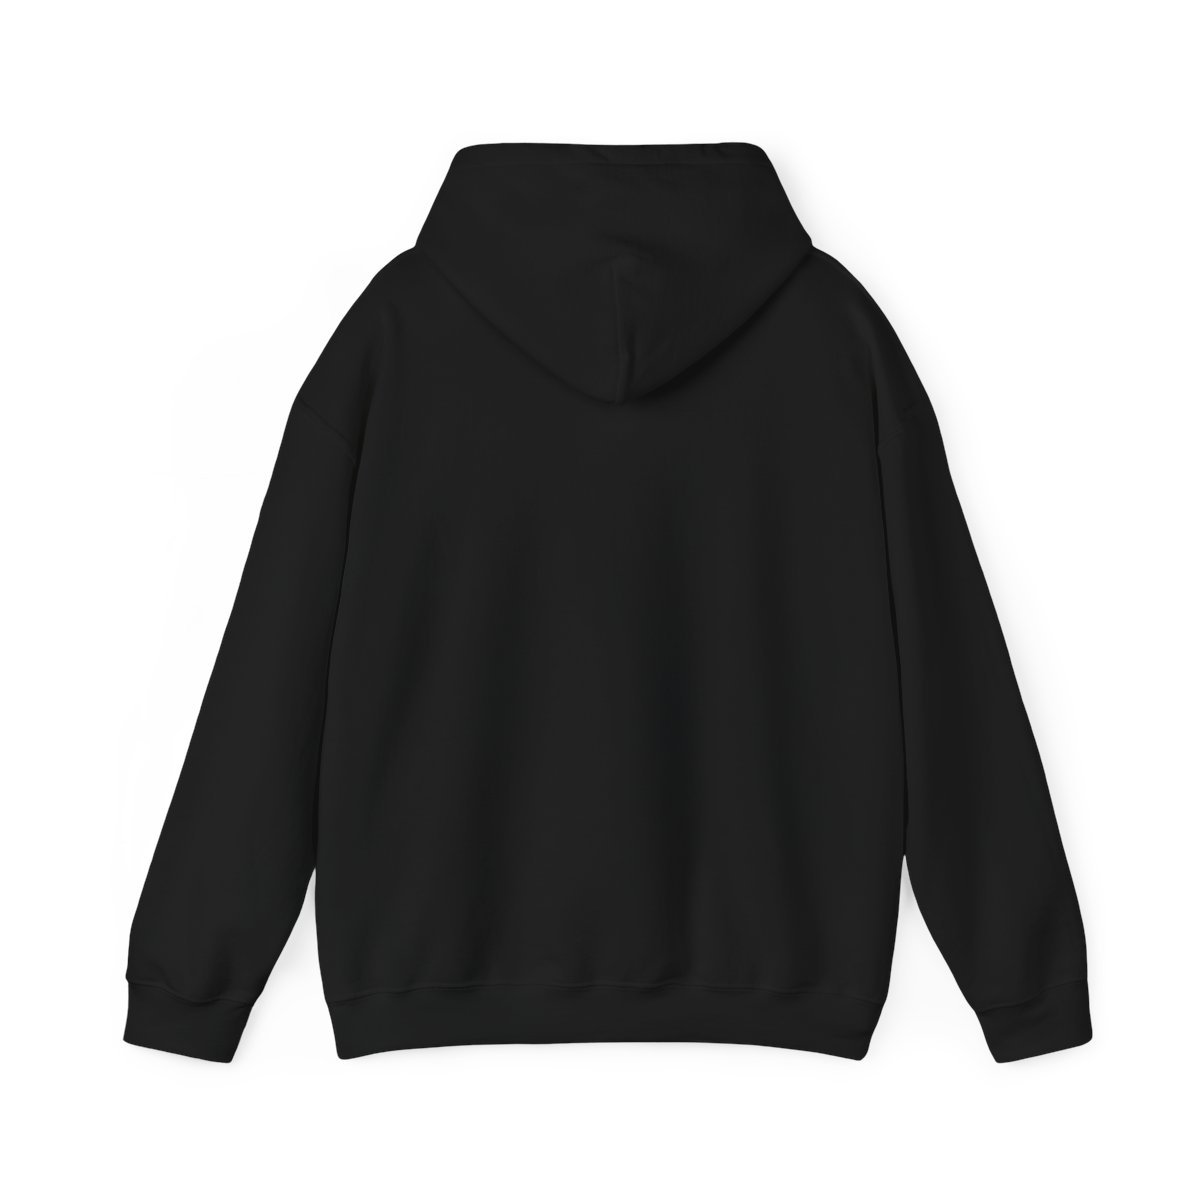 LSU – Shaded Pain Pullover Hooded Sweatshirt